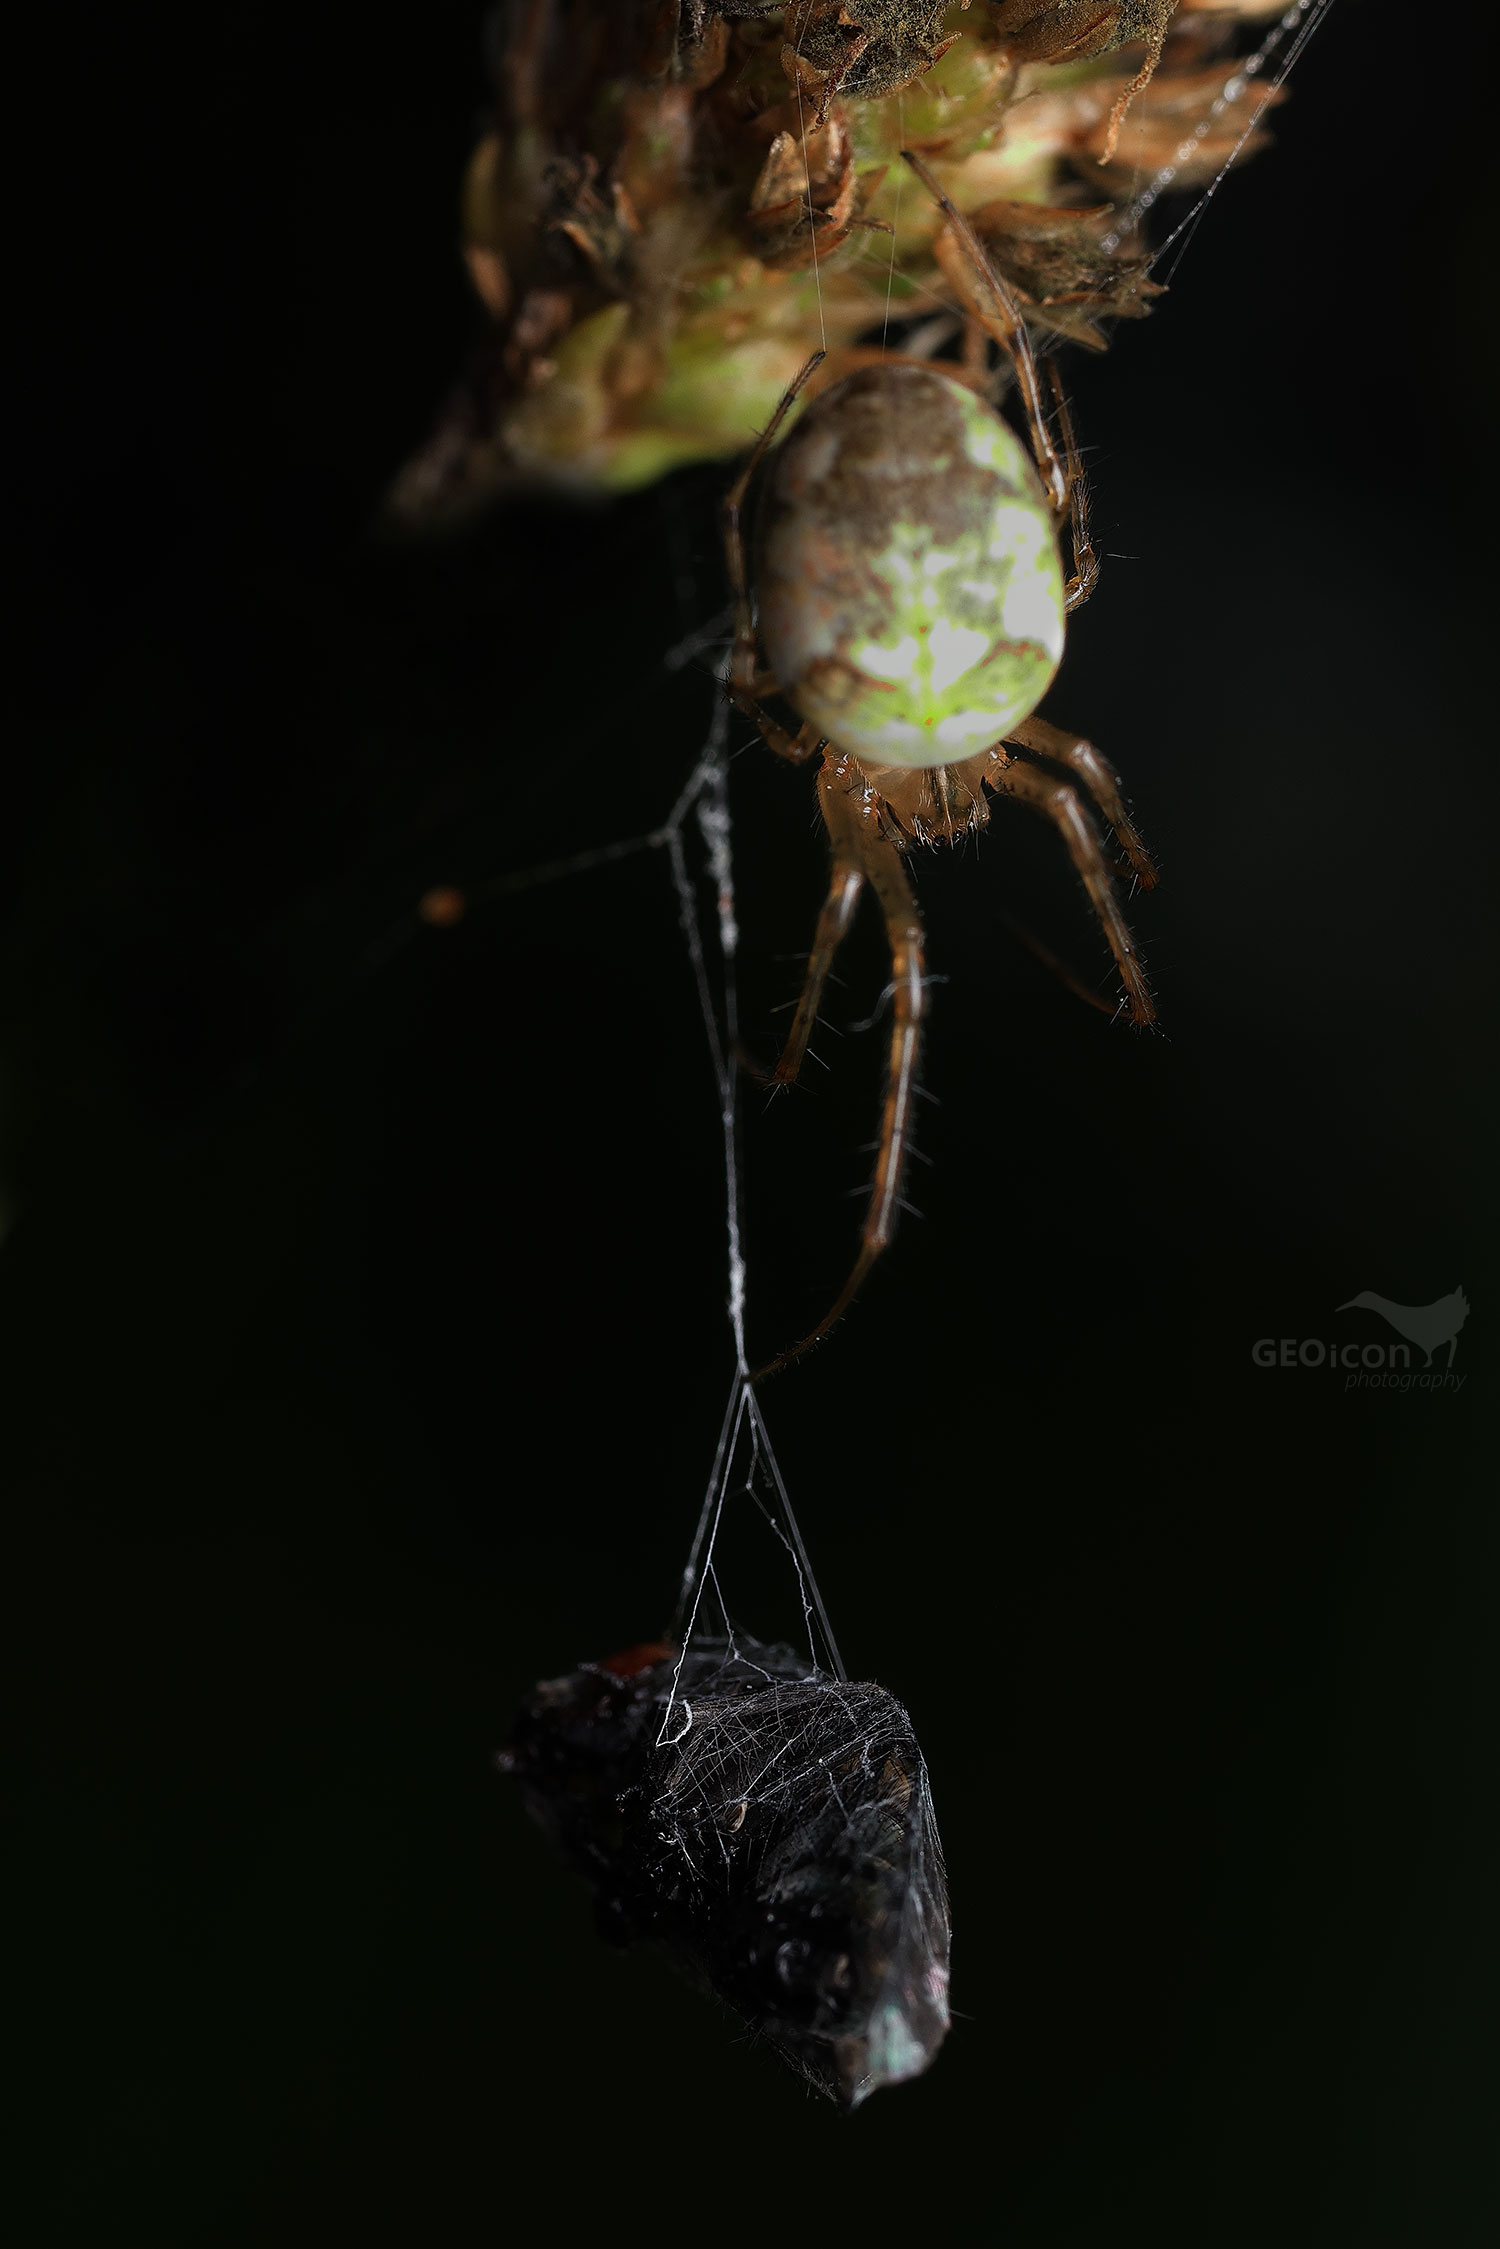 Spider sp. / meta podzimní (Metellina segmentata)